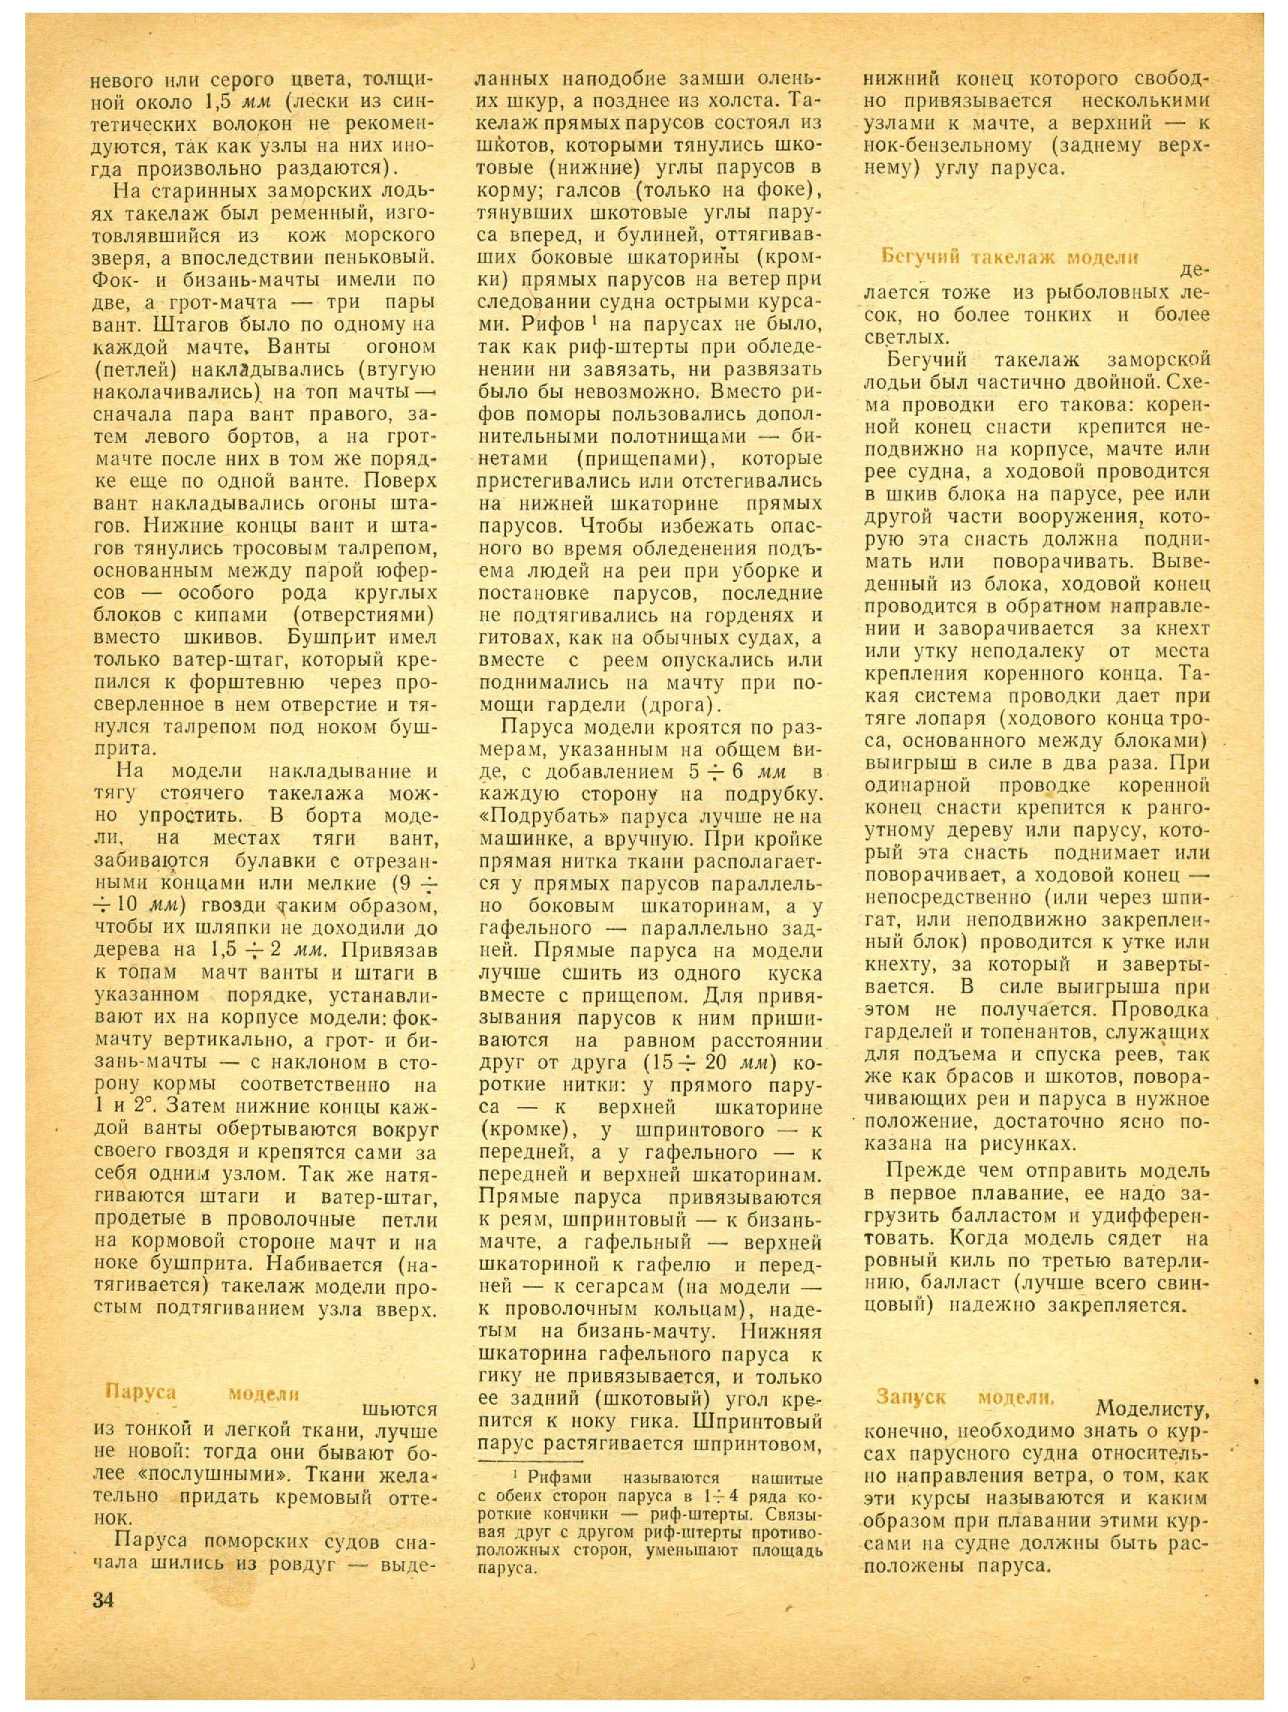 ЮМК 13, 1965, 34 c.